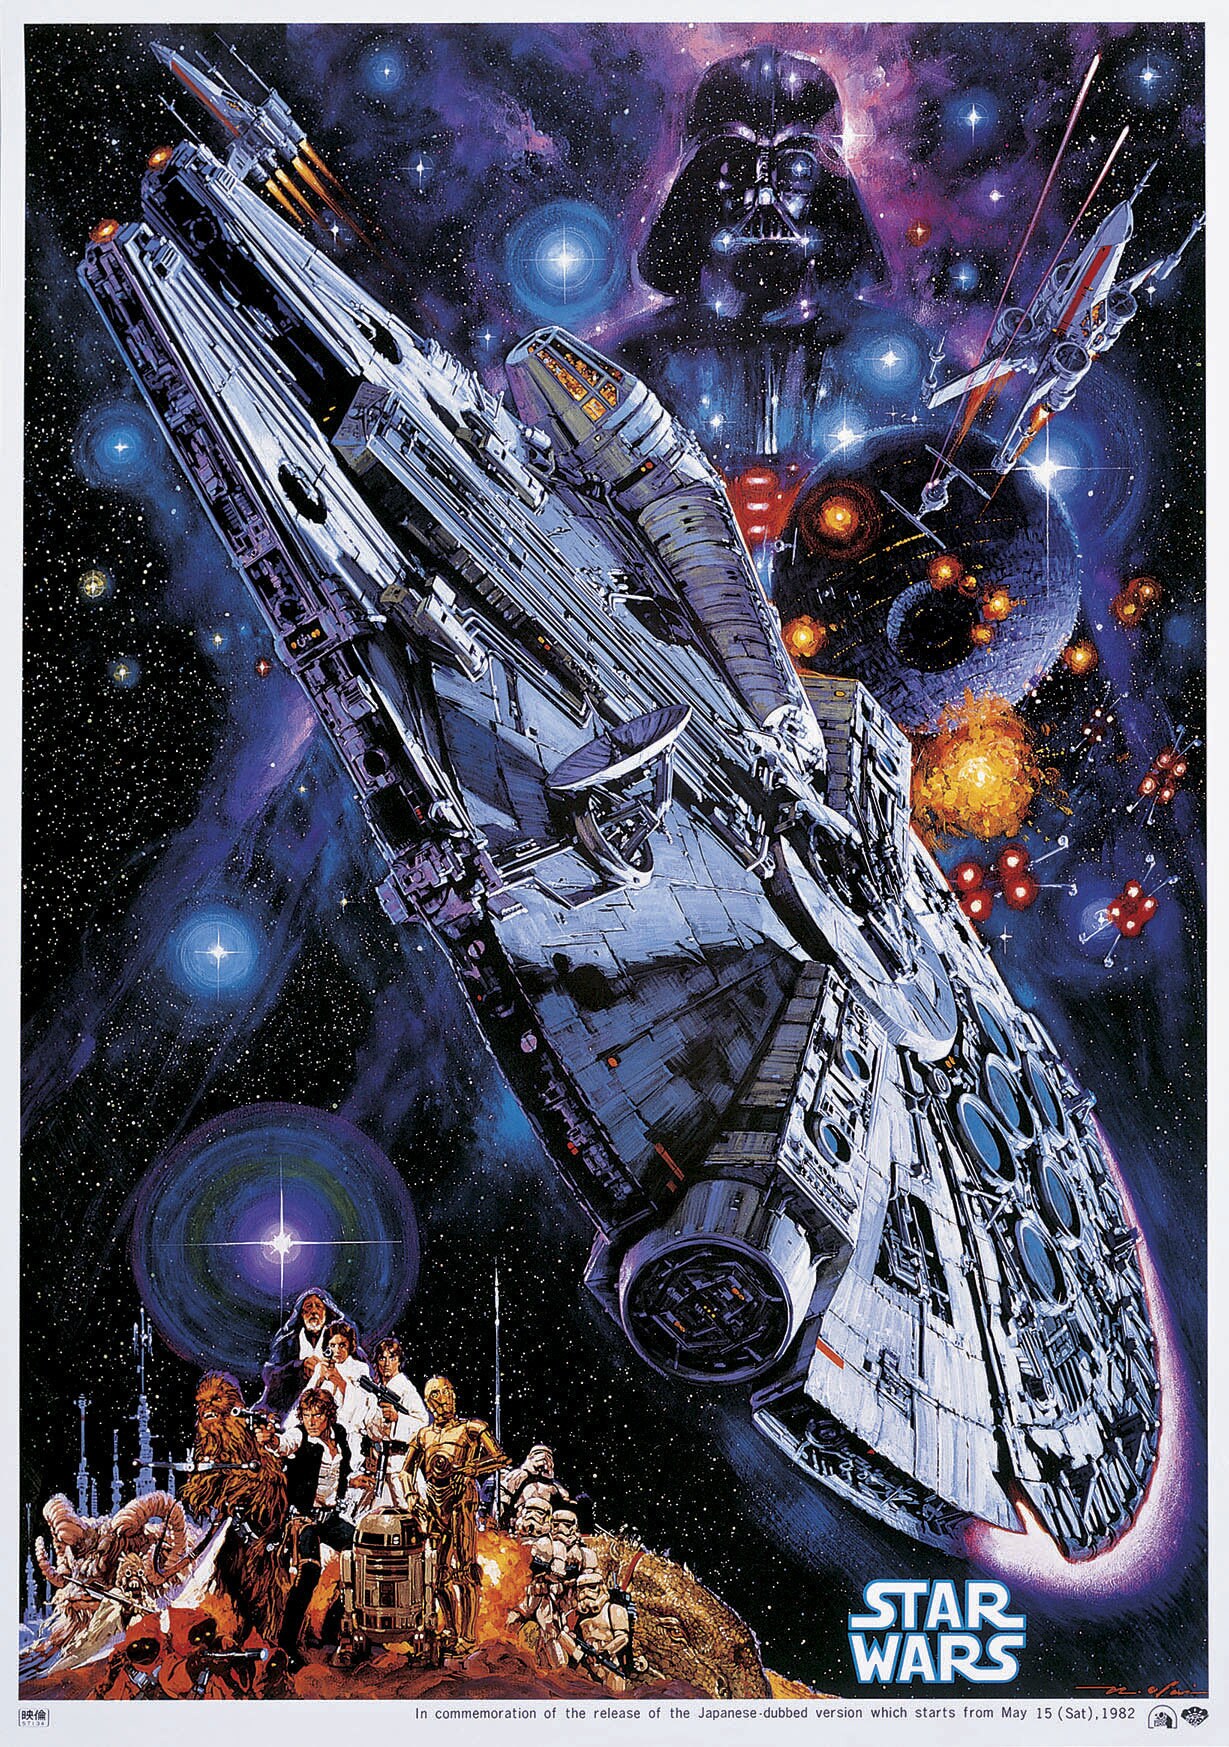 Star Wars 1982 Japanese Dub by Noriyoshi Ohrai